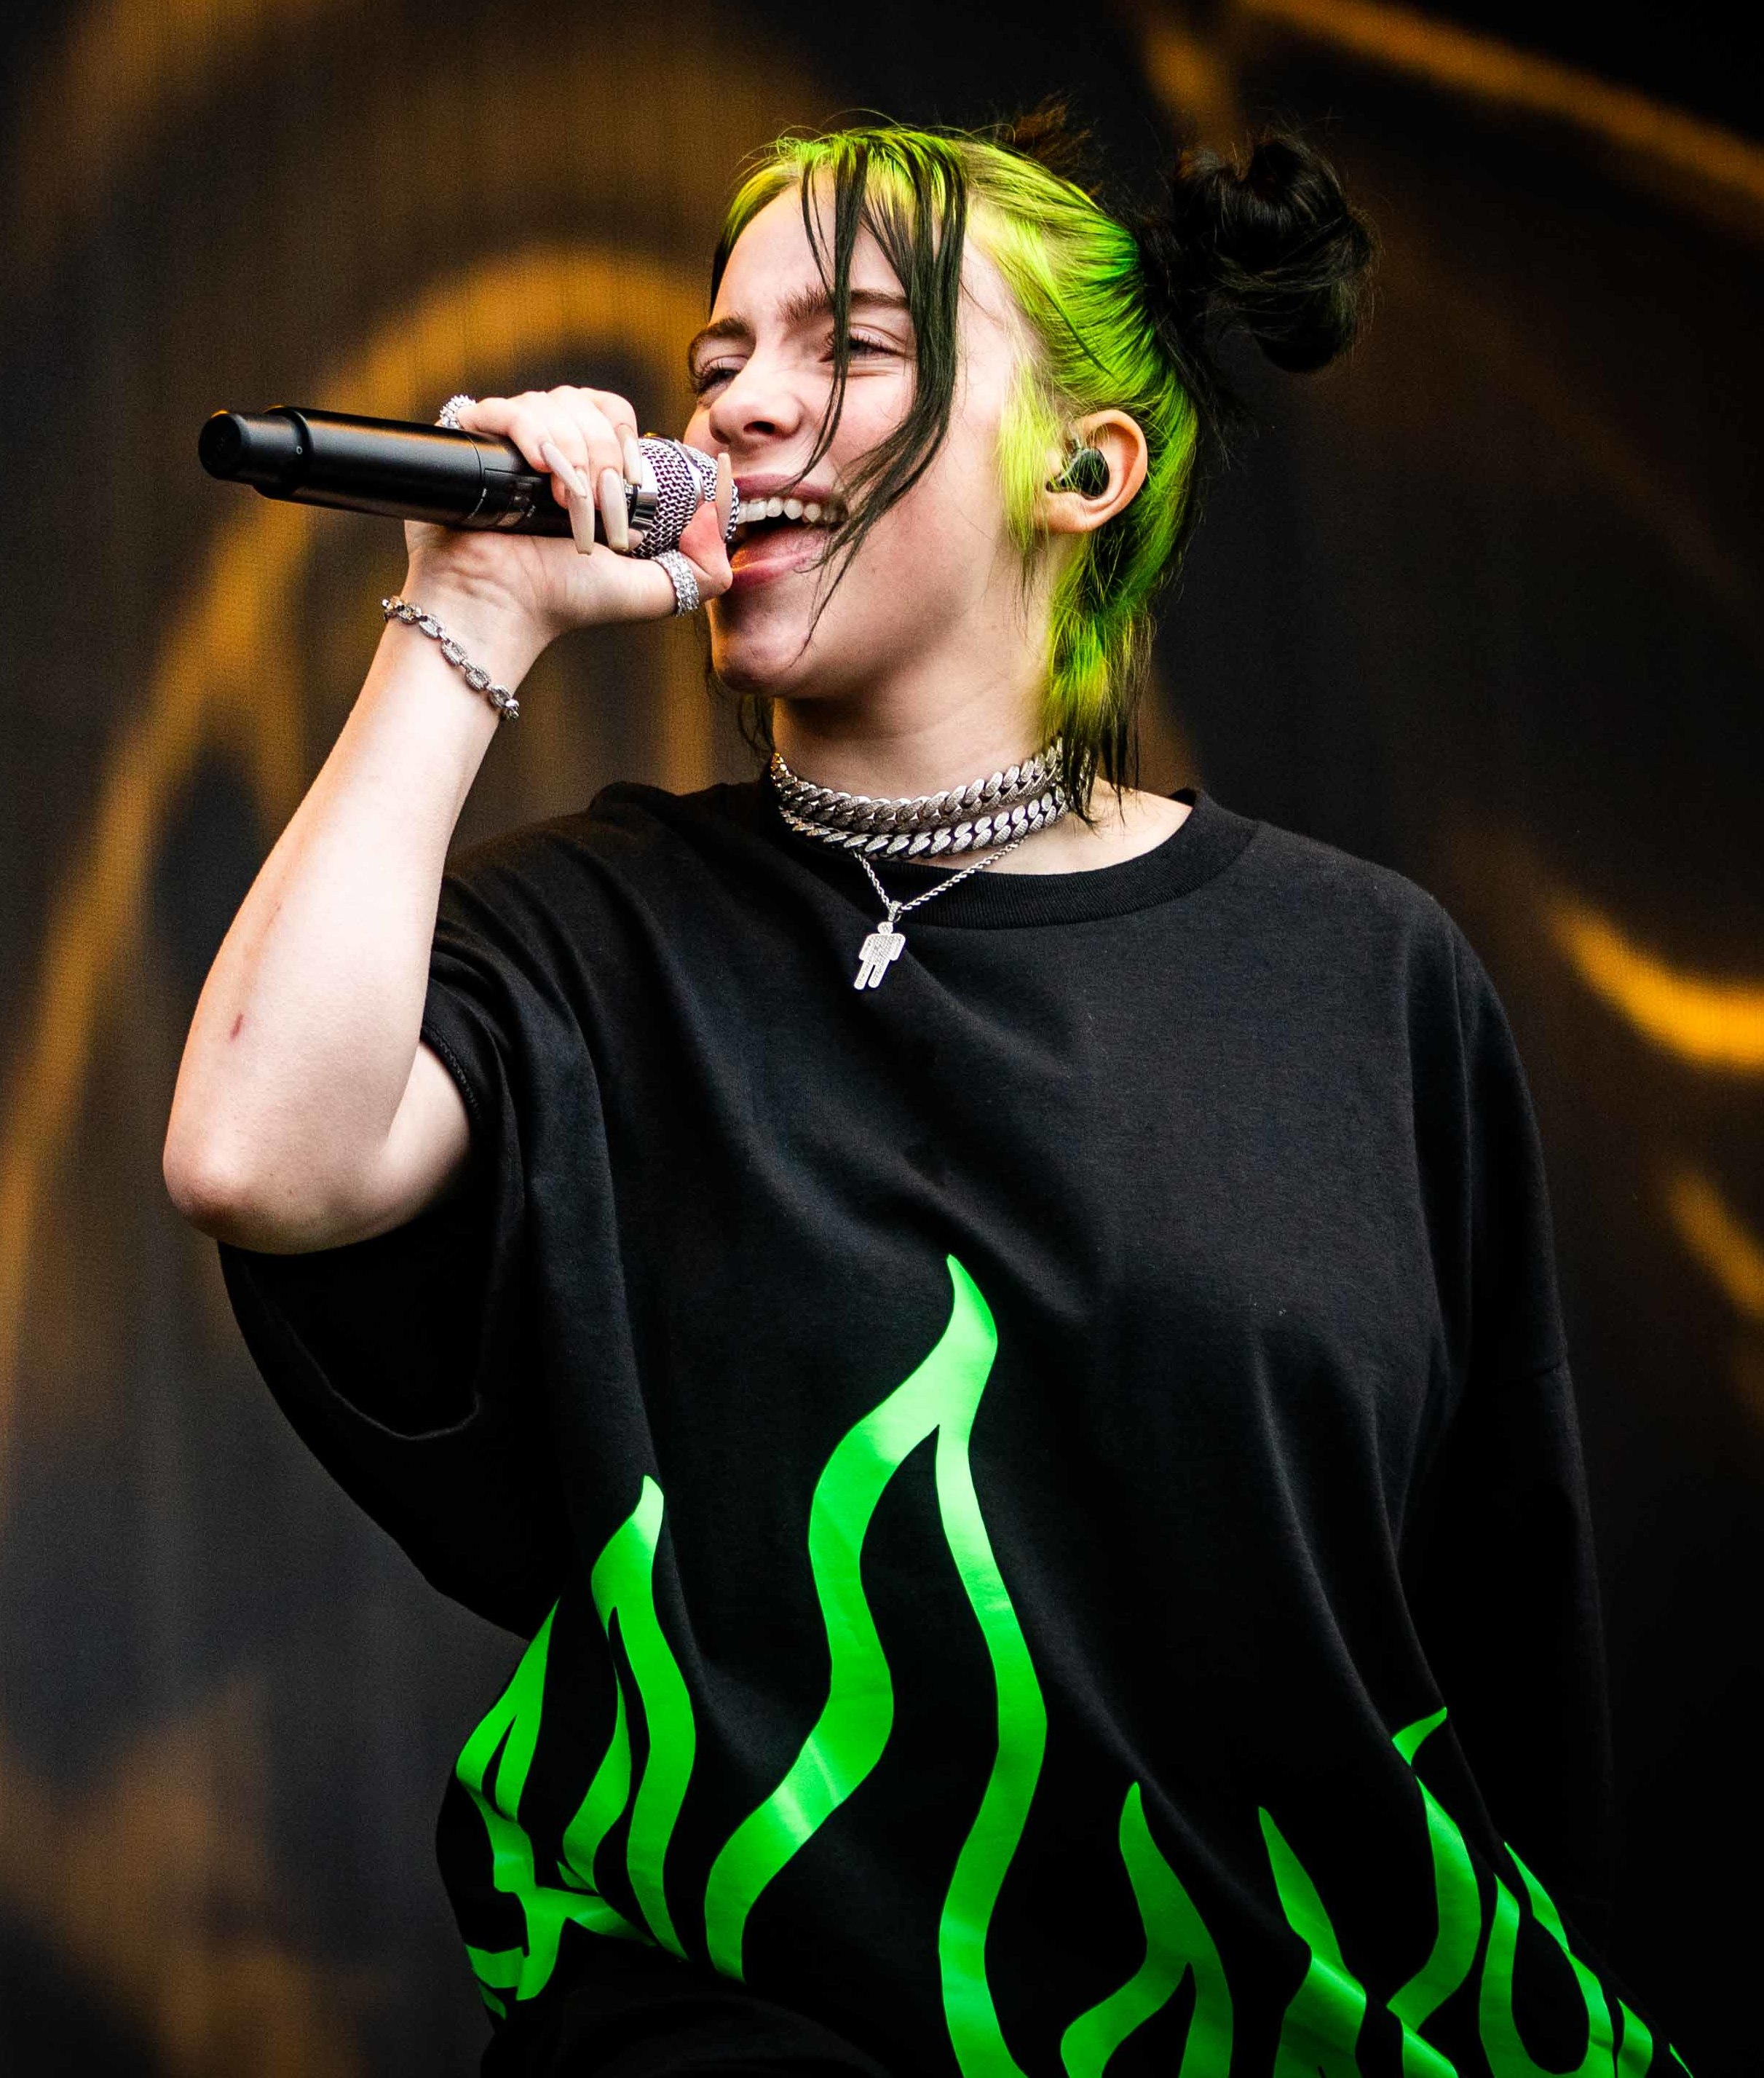 File:Billie Eilish at Pukkelpop Festival - 18 AUGUST 2019 (01) (cropped).jpg - Wikimedia Commons